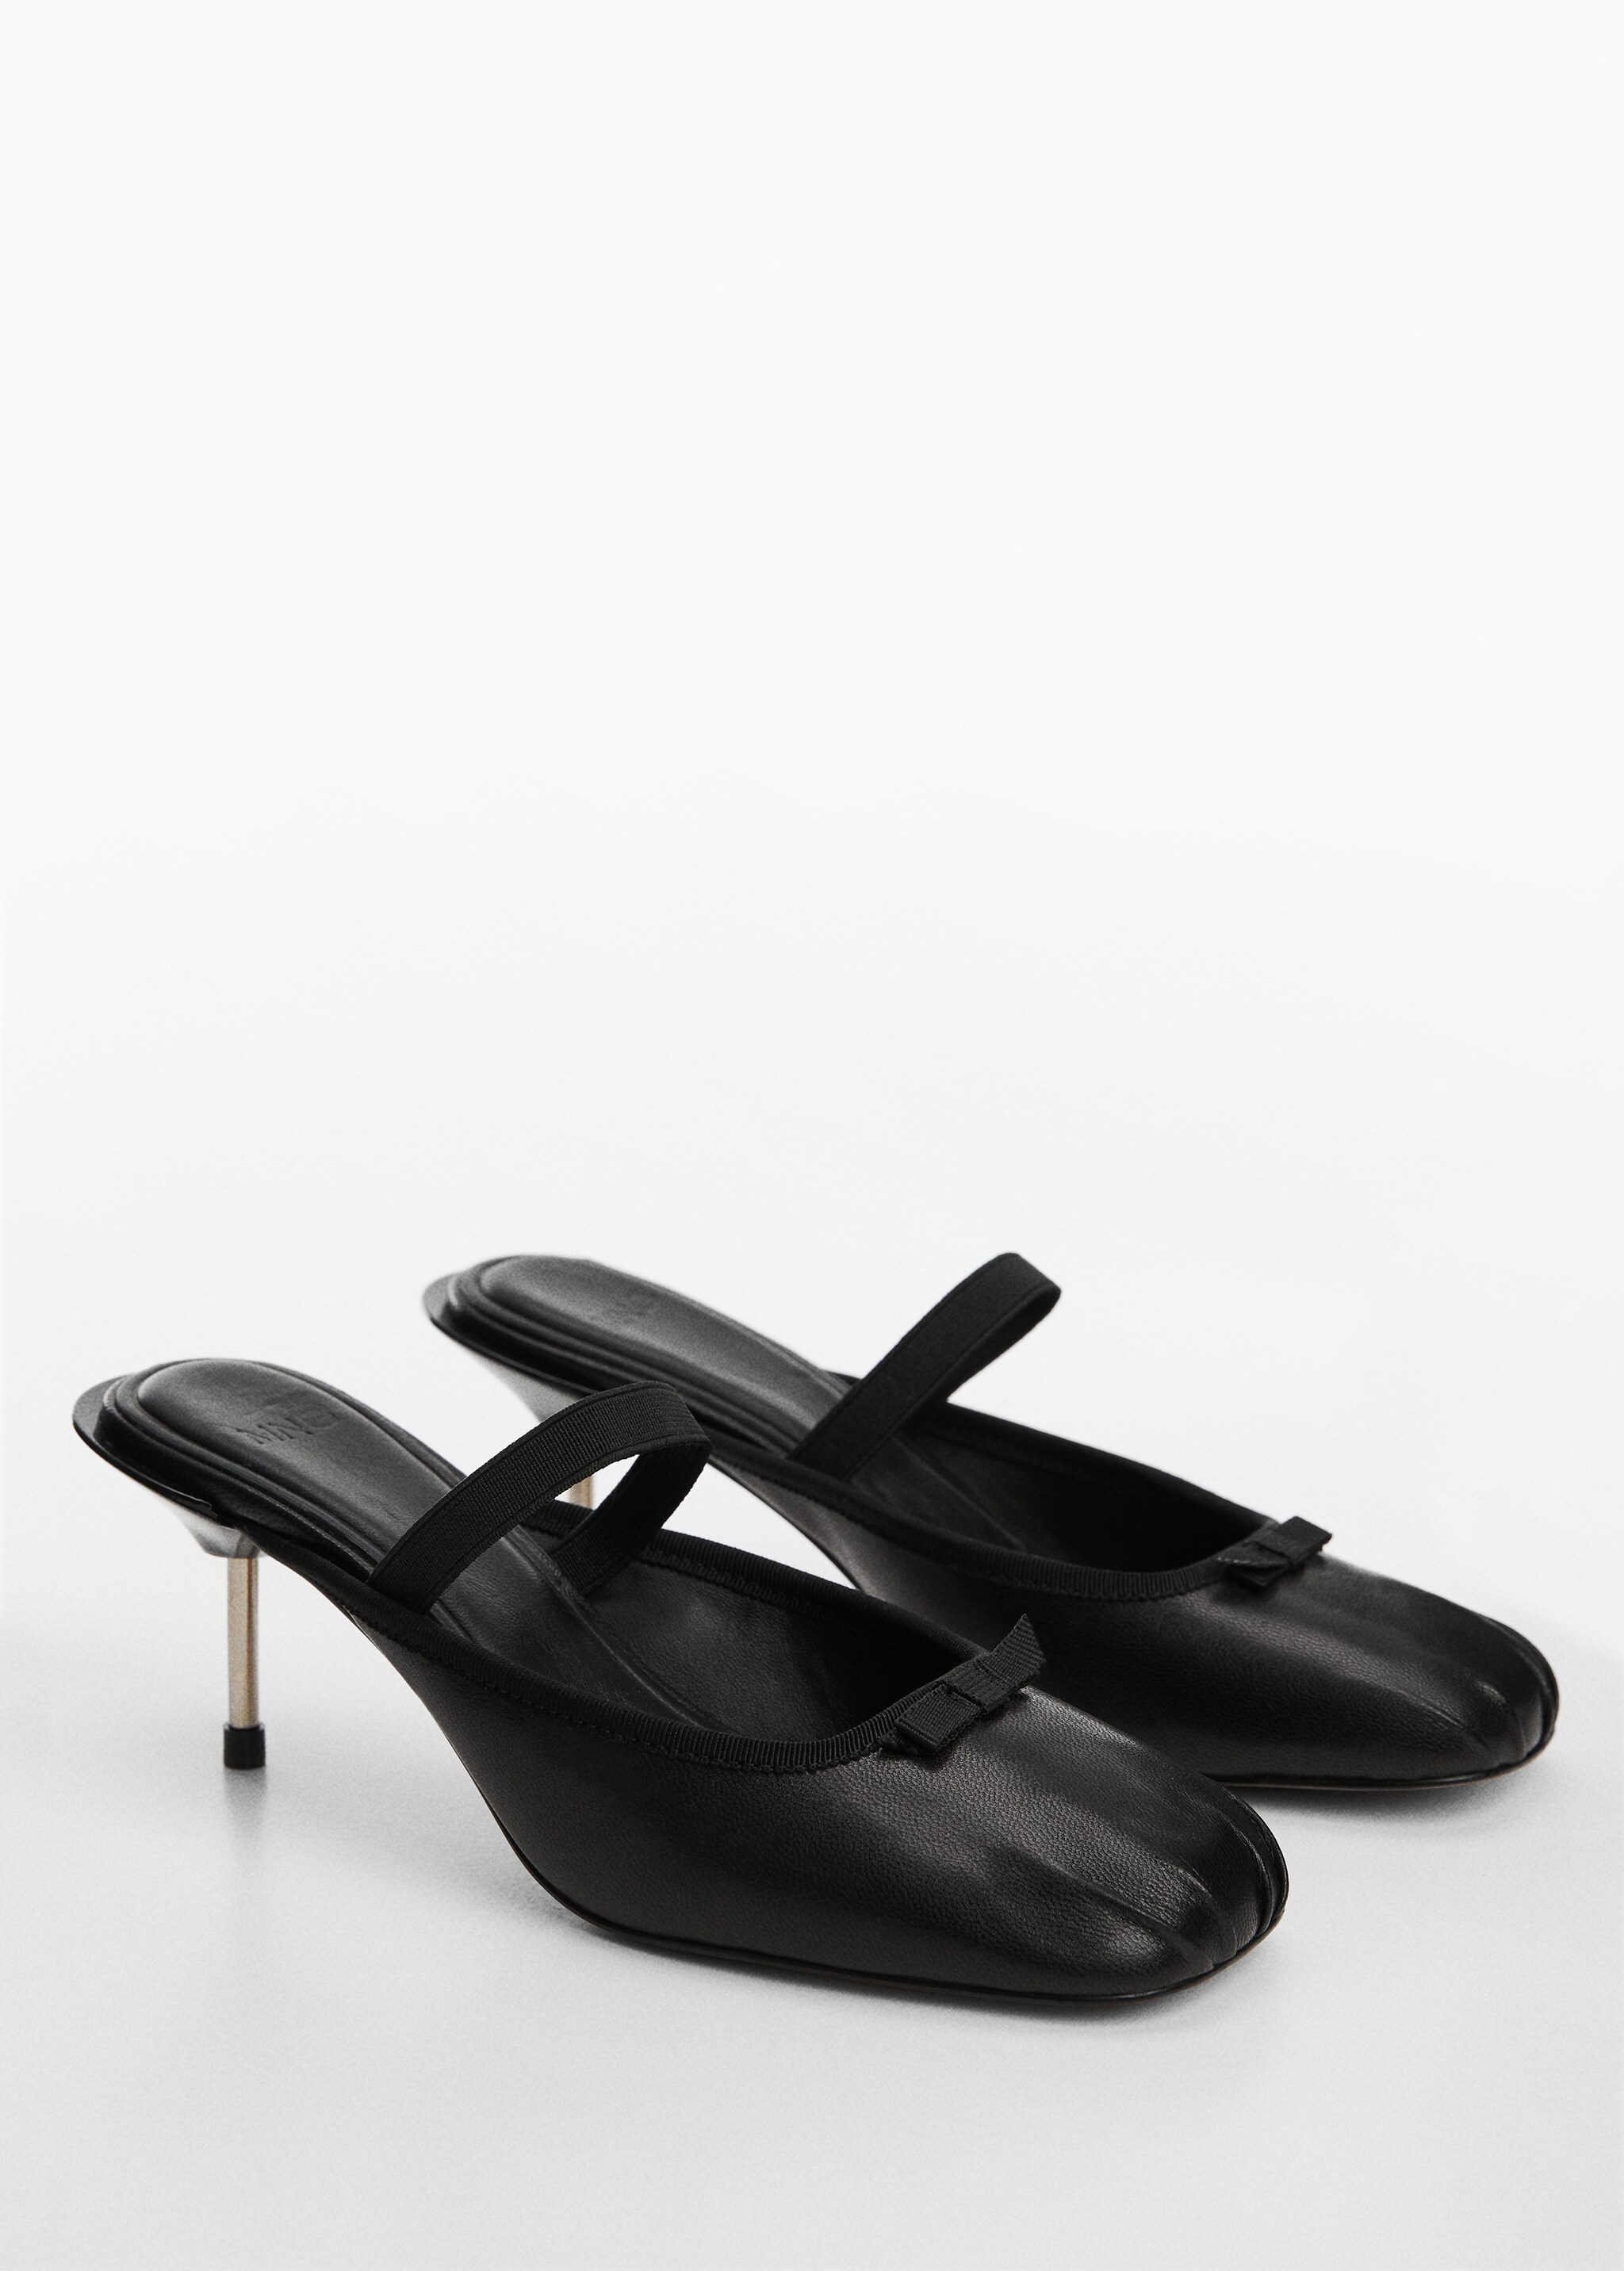 Leather ballerinas with metallic heel - Medium plane